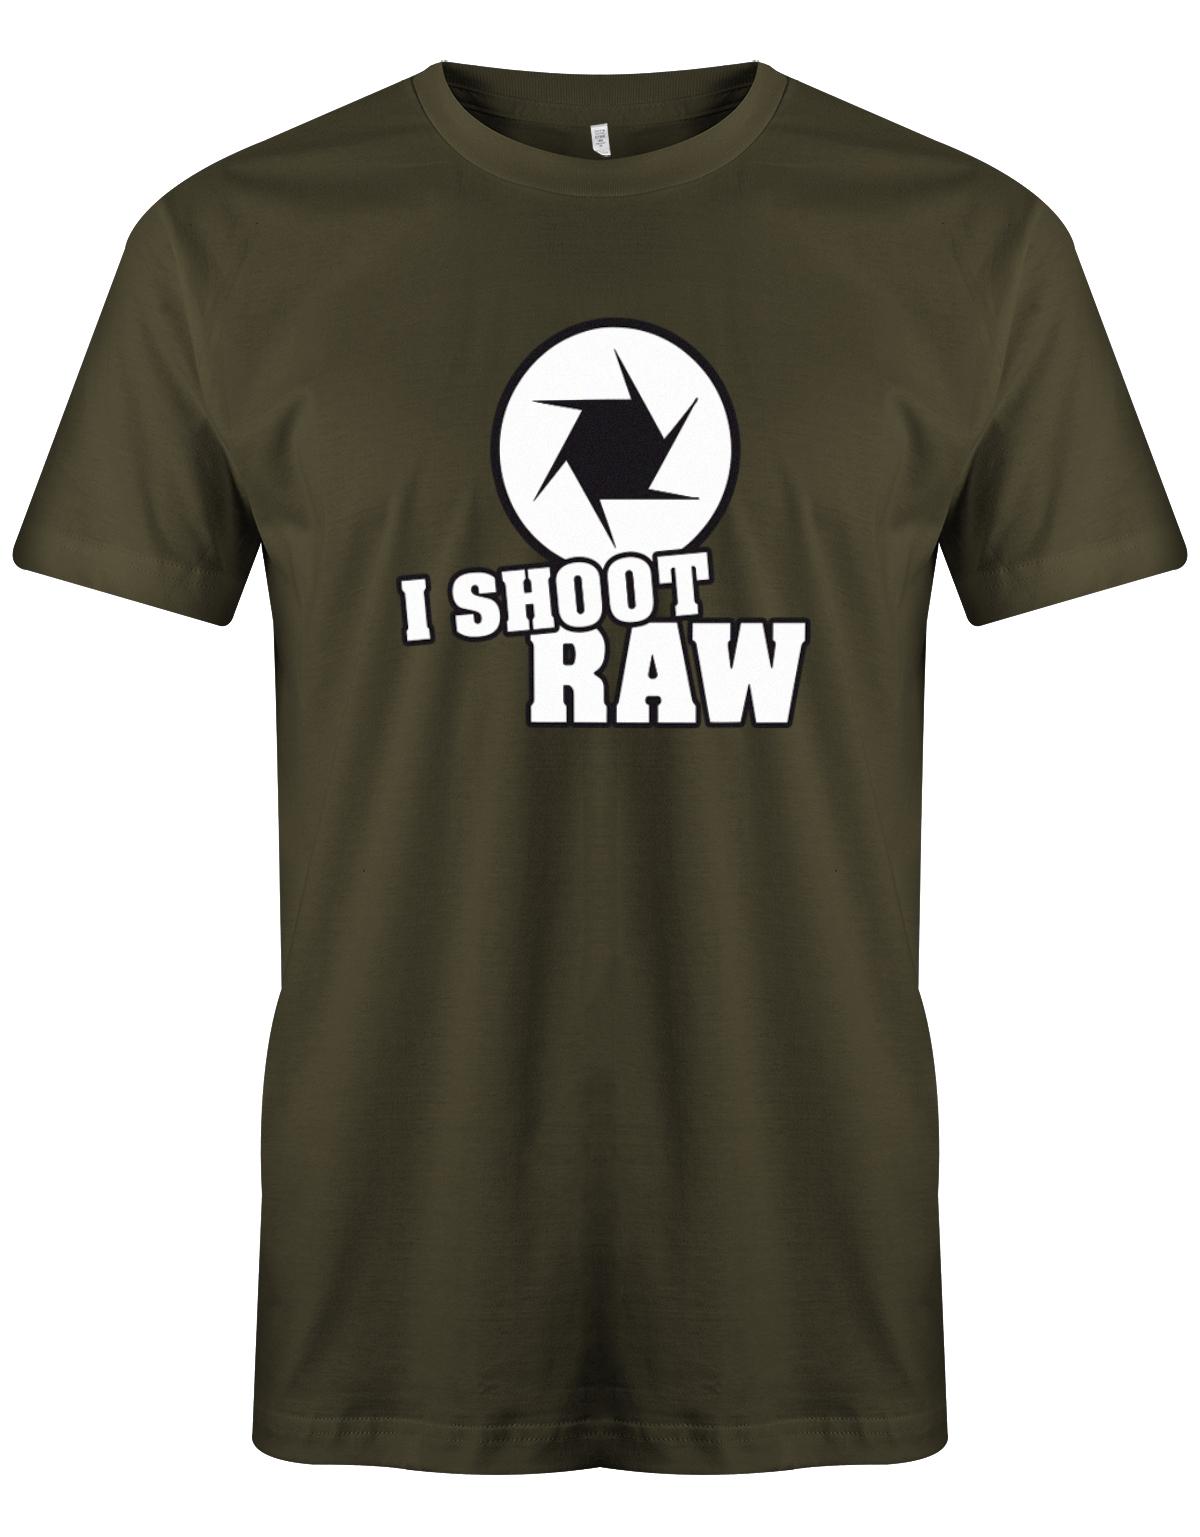 Fotografen Shirt - I Shoot Raw - Fotografen Linse Army